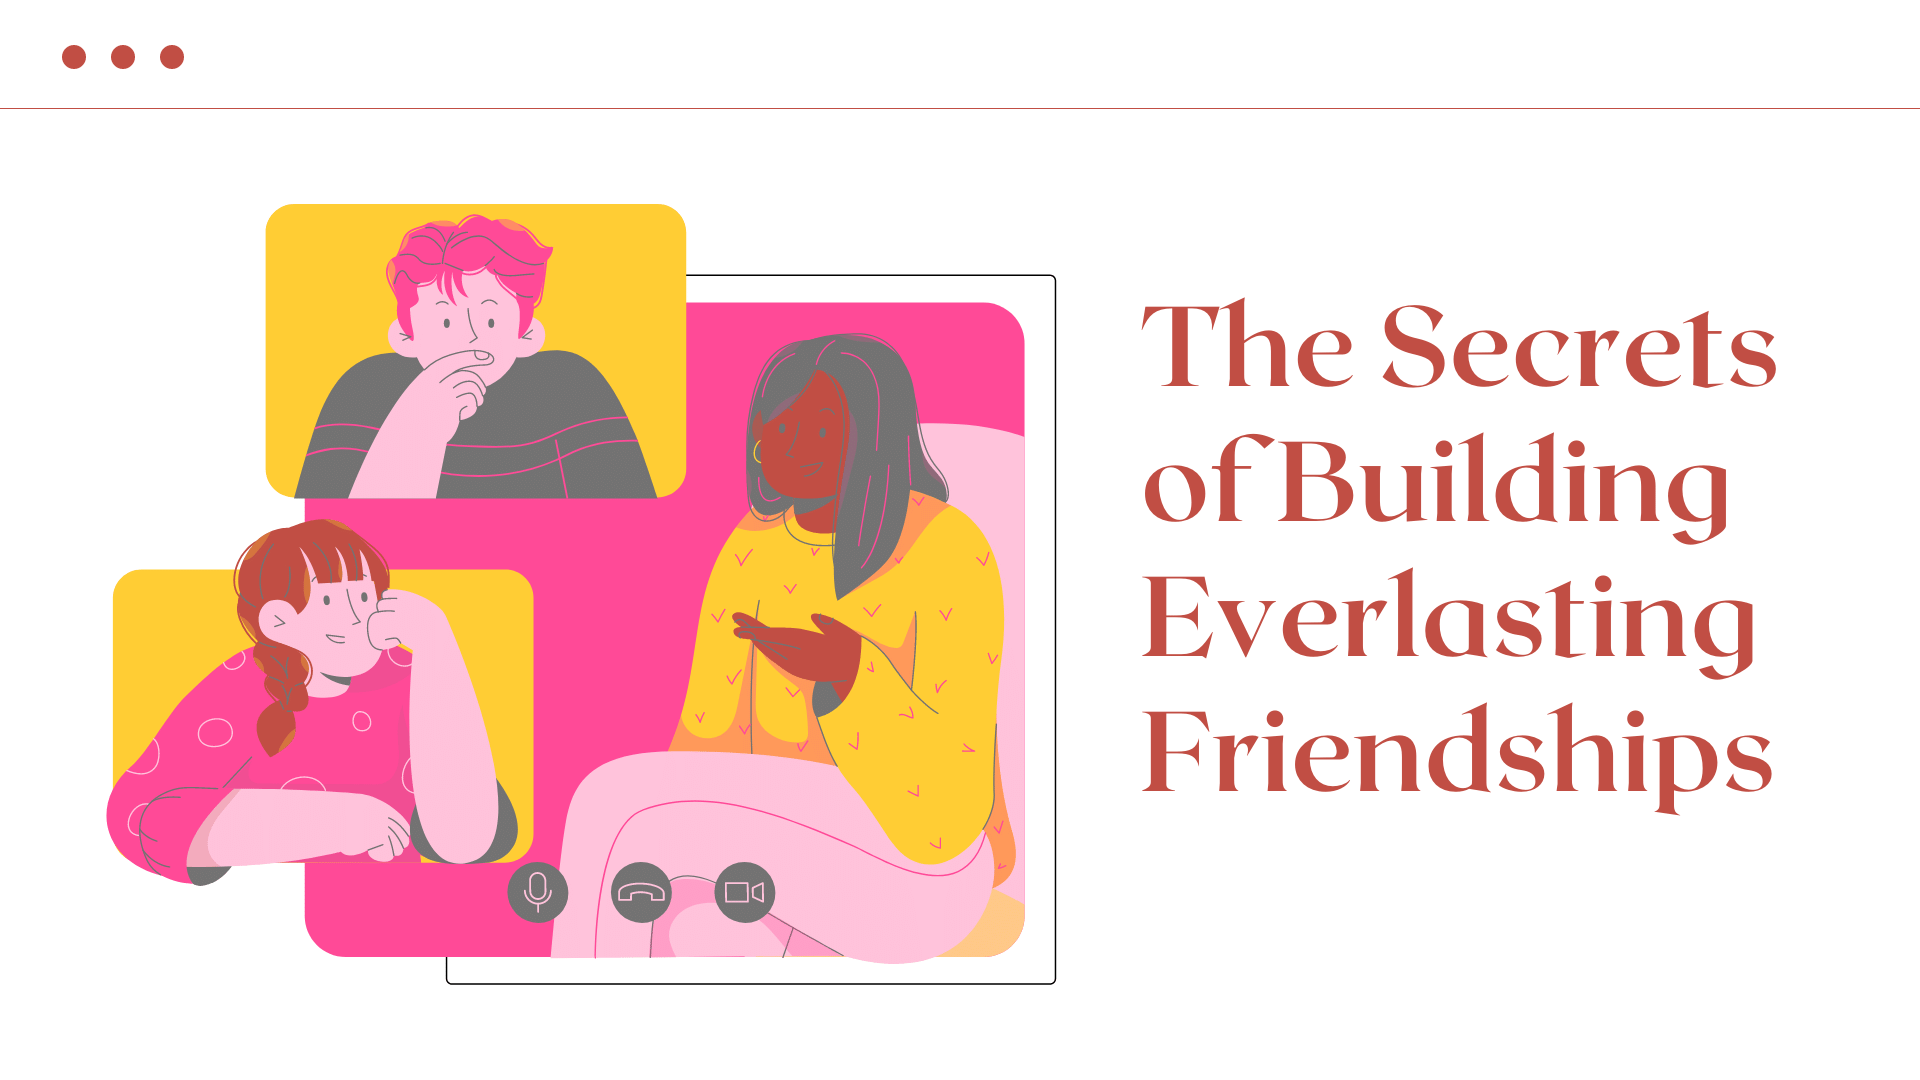 The Secrets of Building Everlasting Friendships